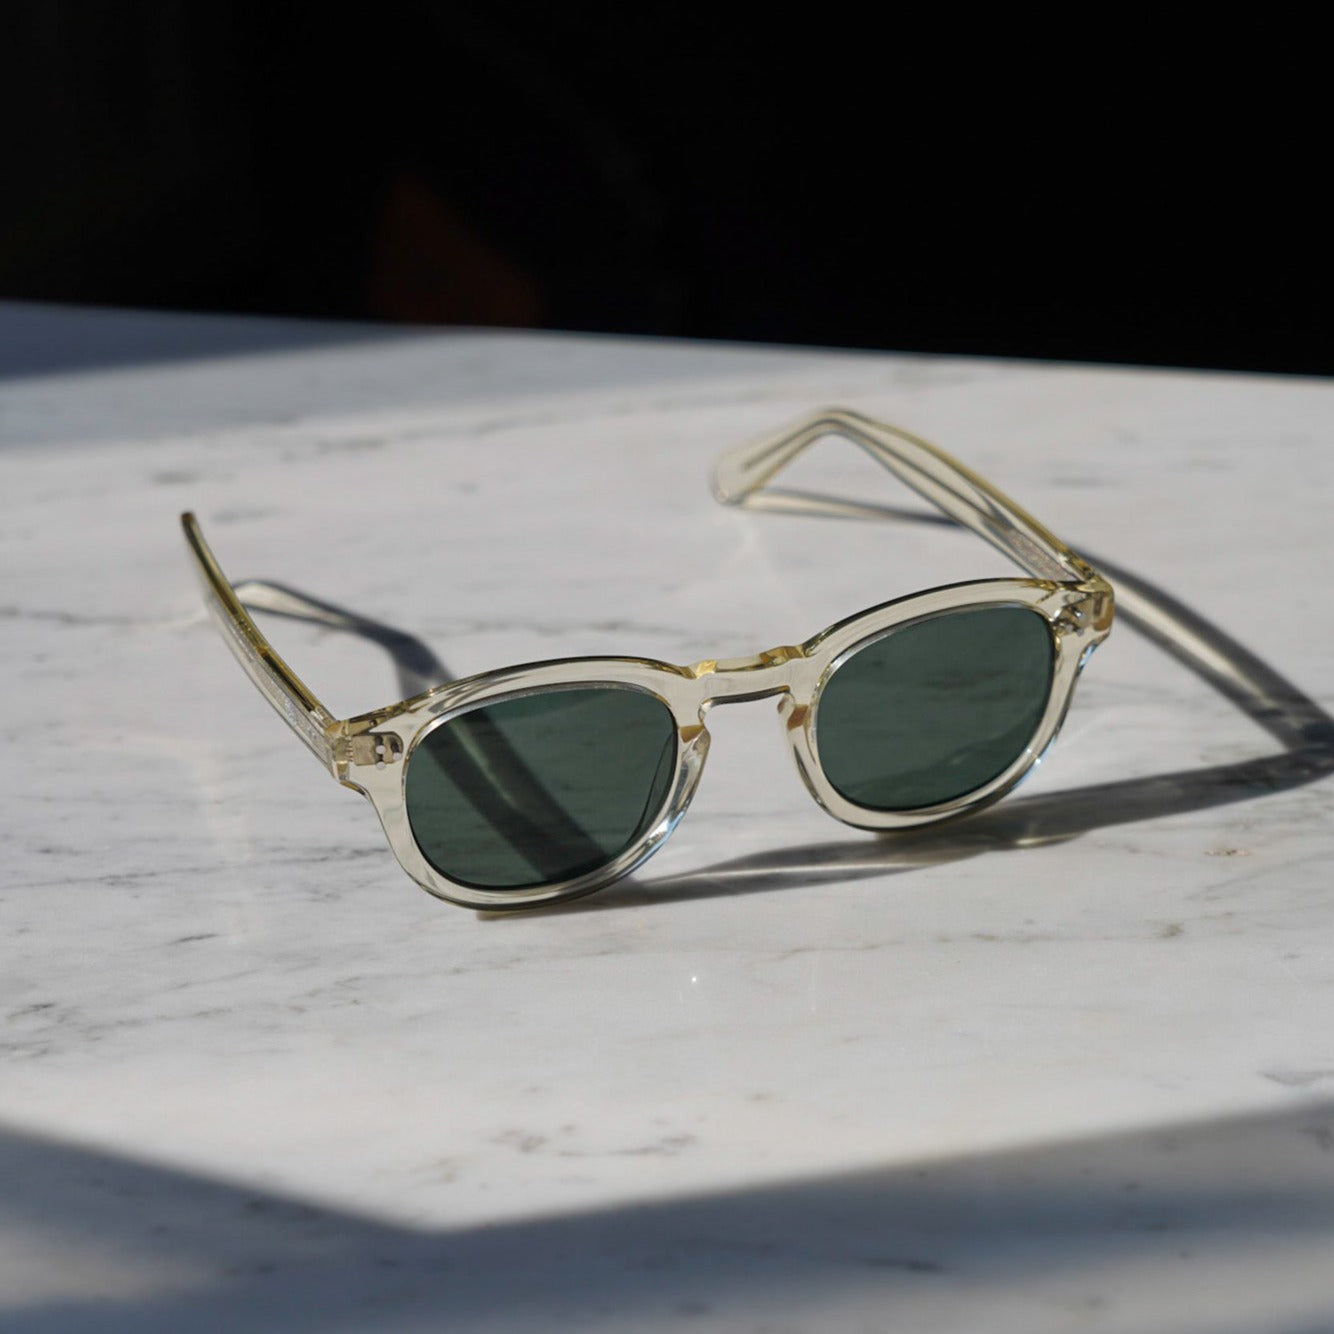 Legacy sunglasses - Champagne green